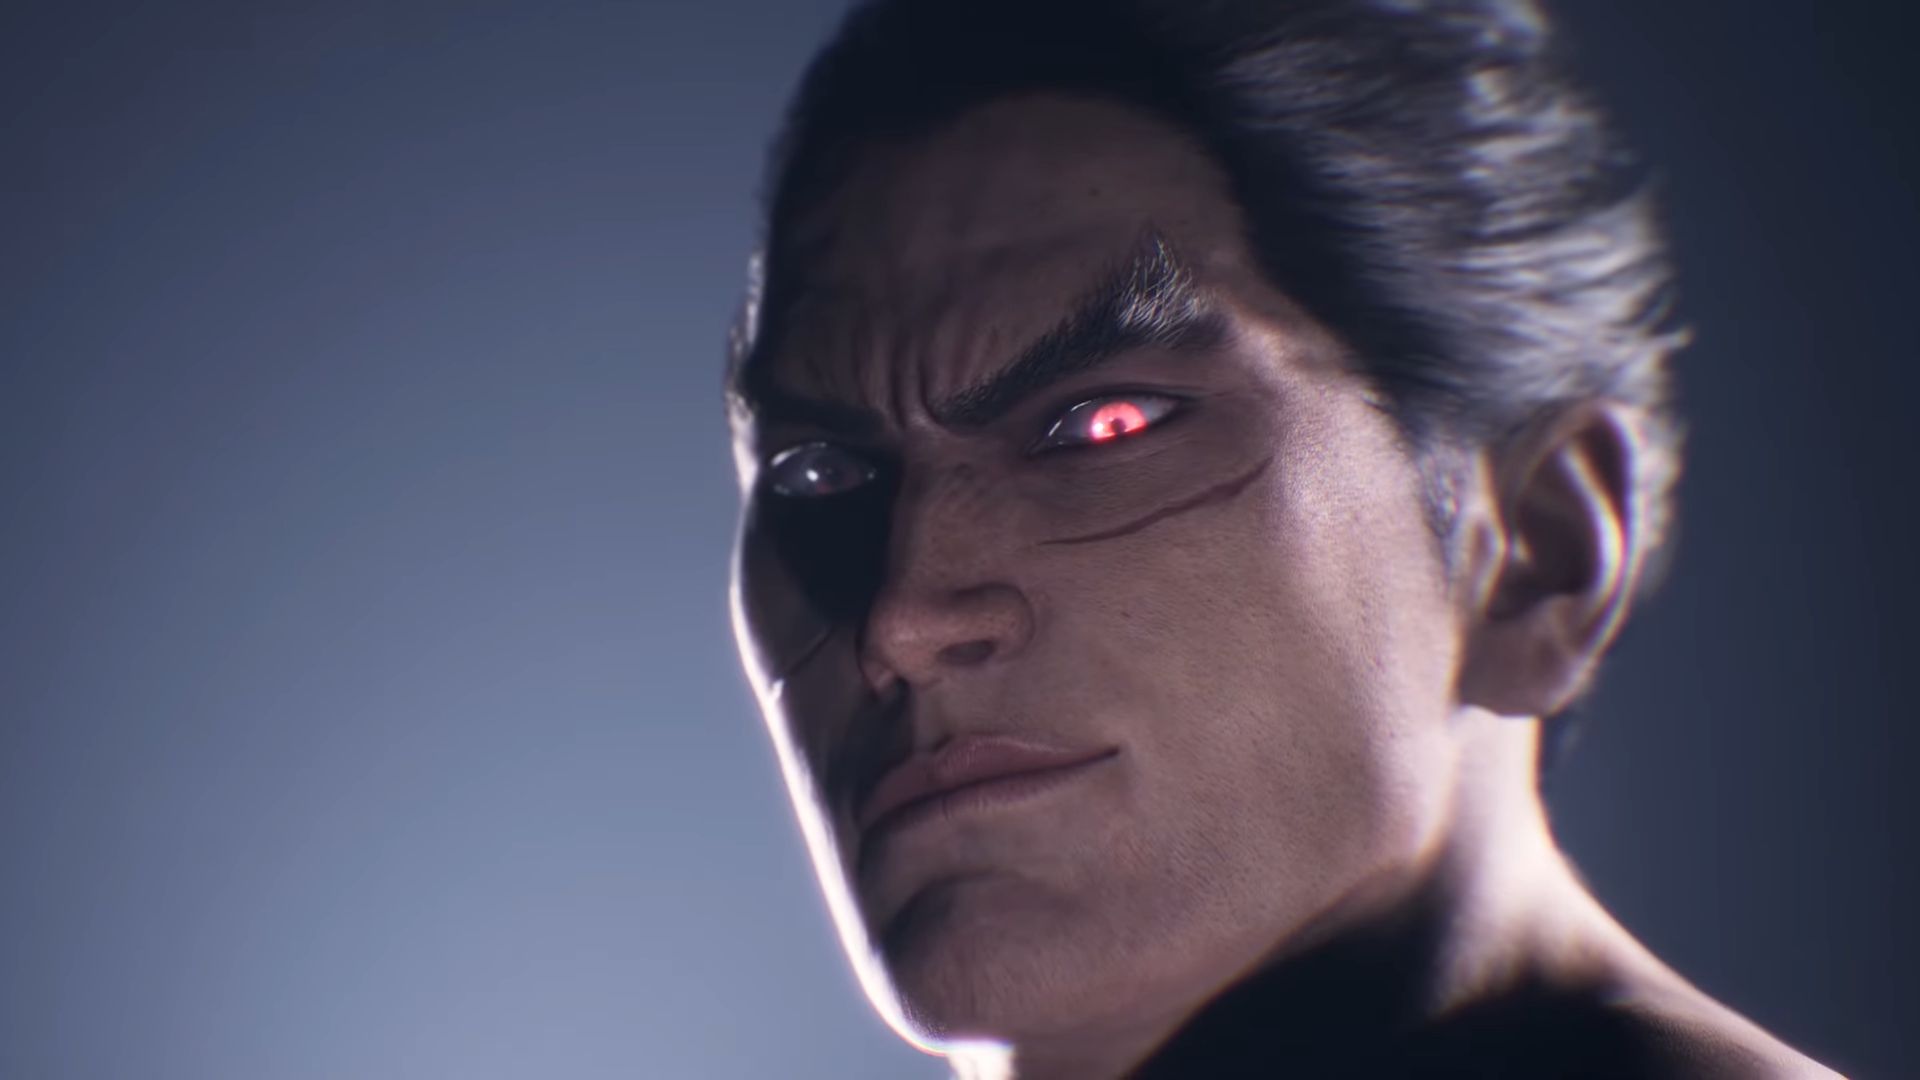 Kazuya Mishima Tekken 8 render, Tekken